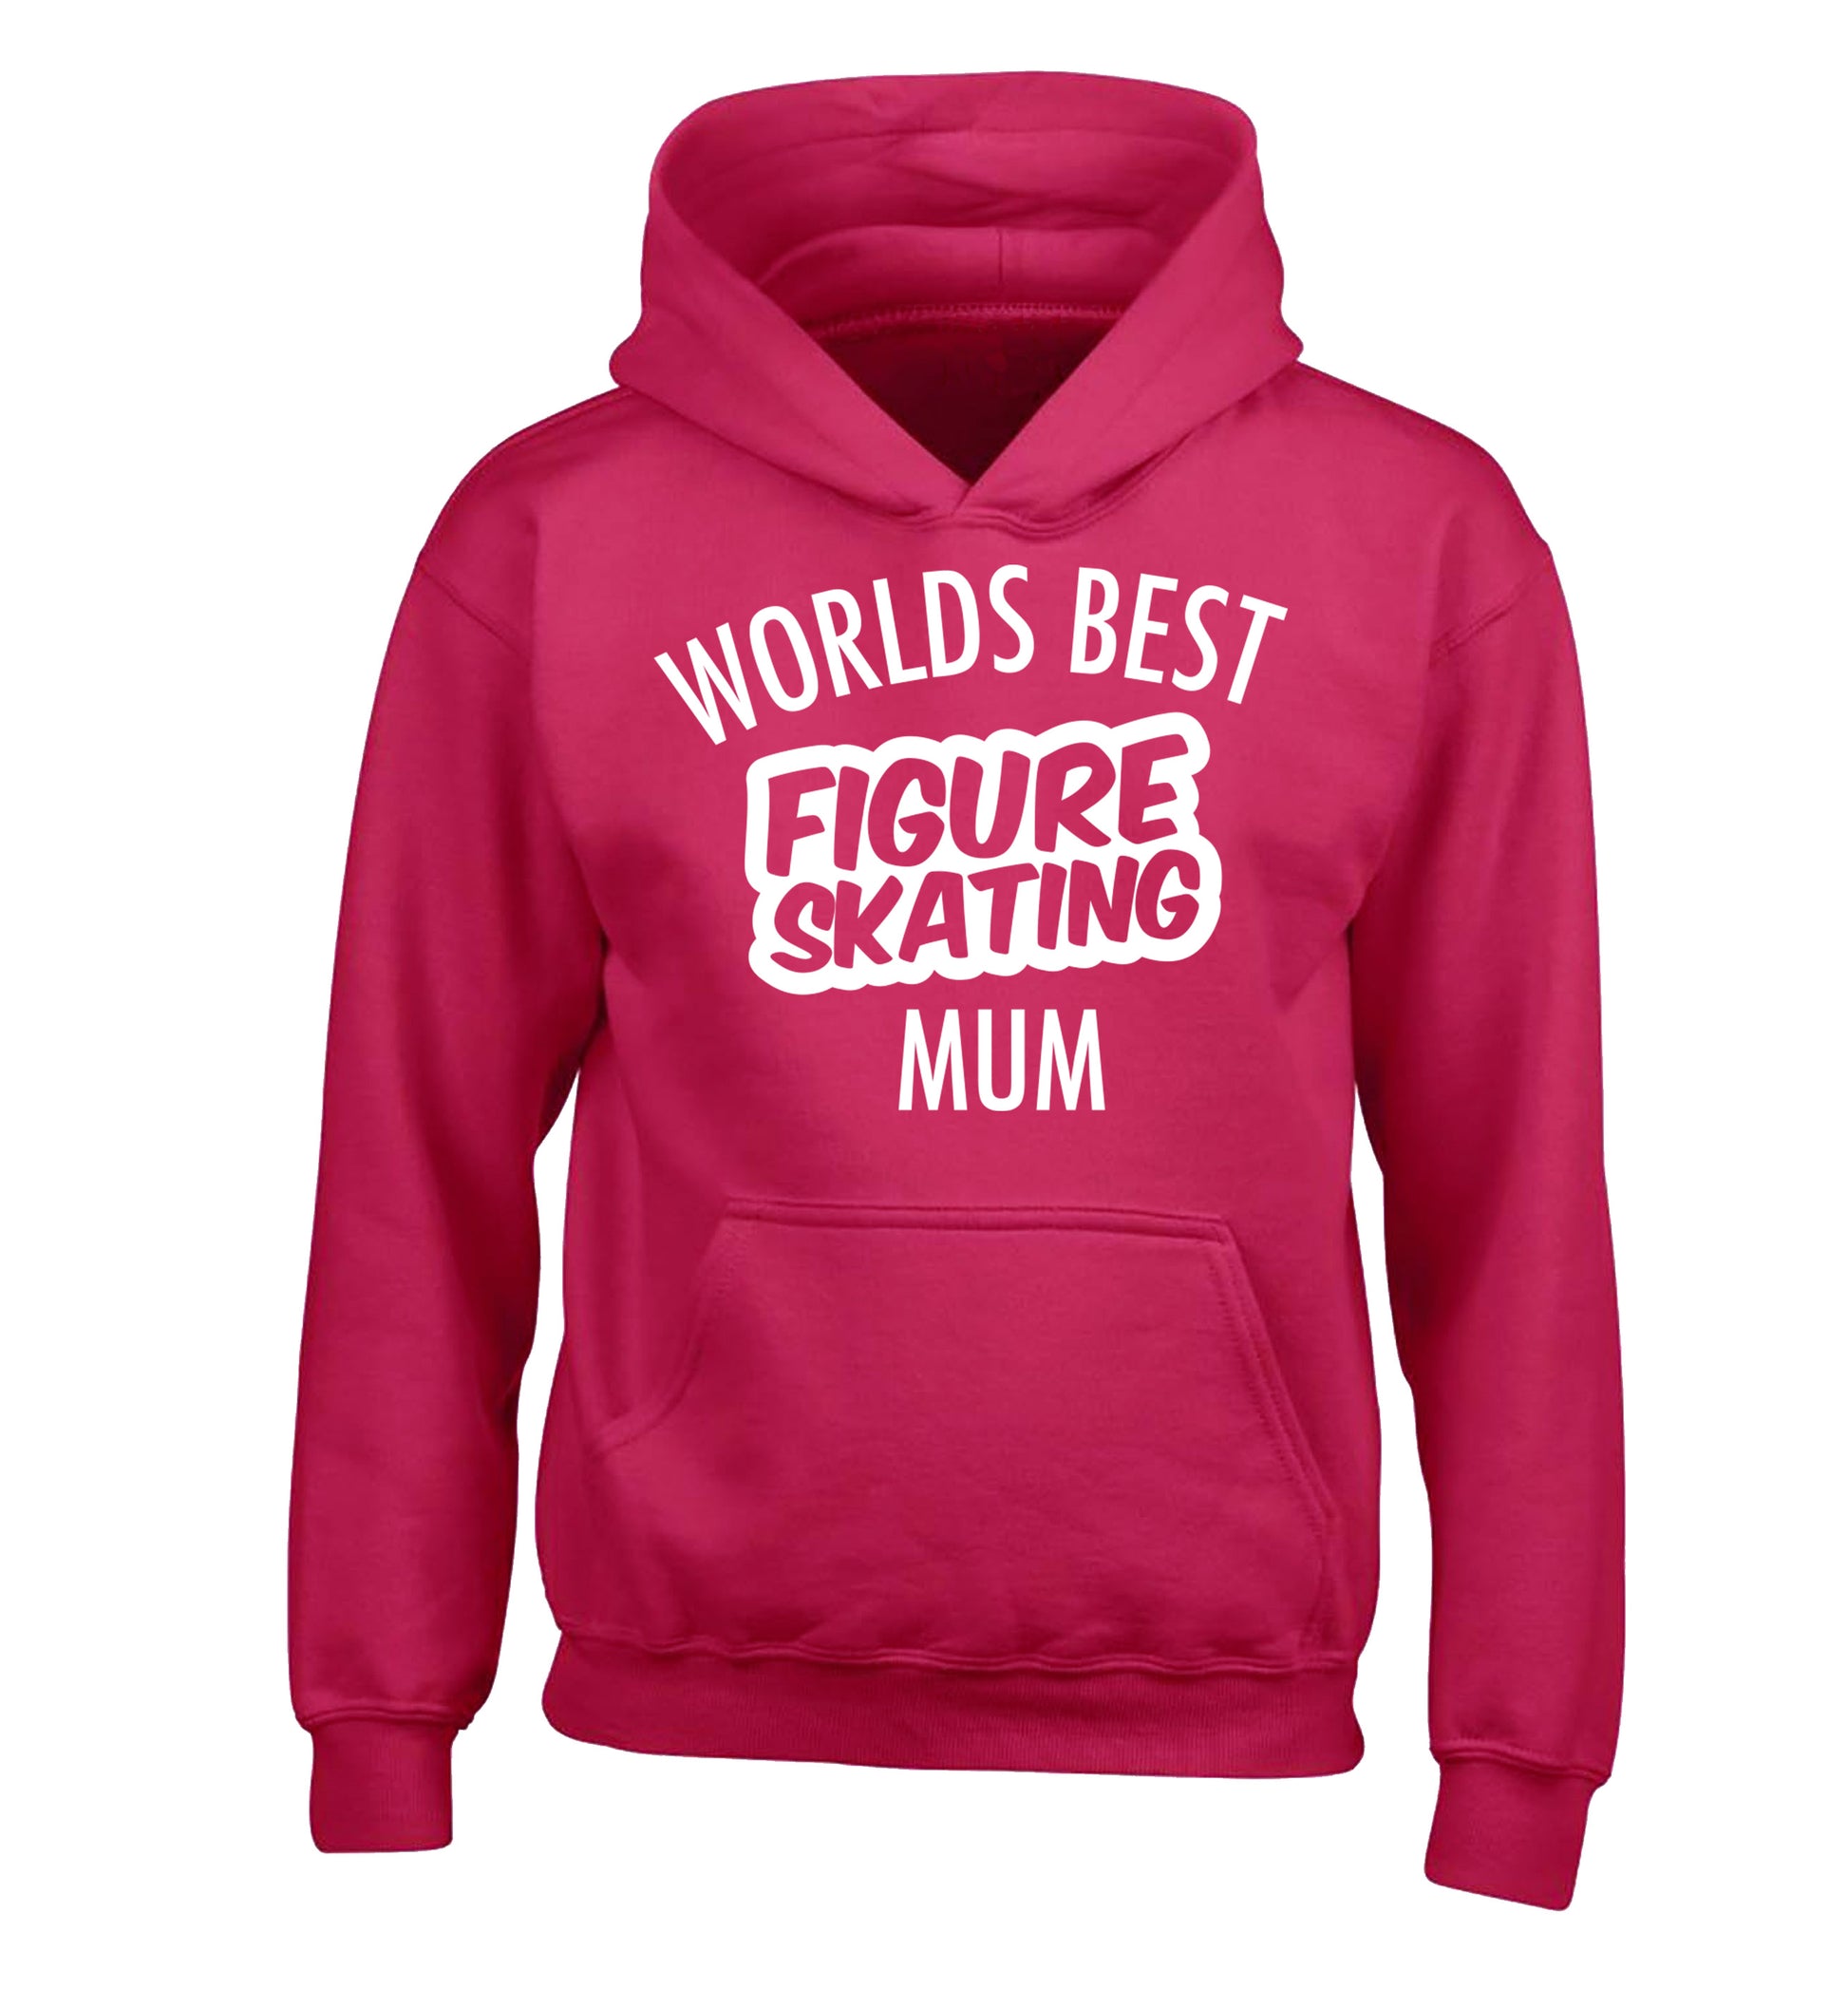 Worlds best figure skating mum children's pink hoodie 12-14 Years